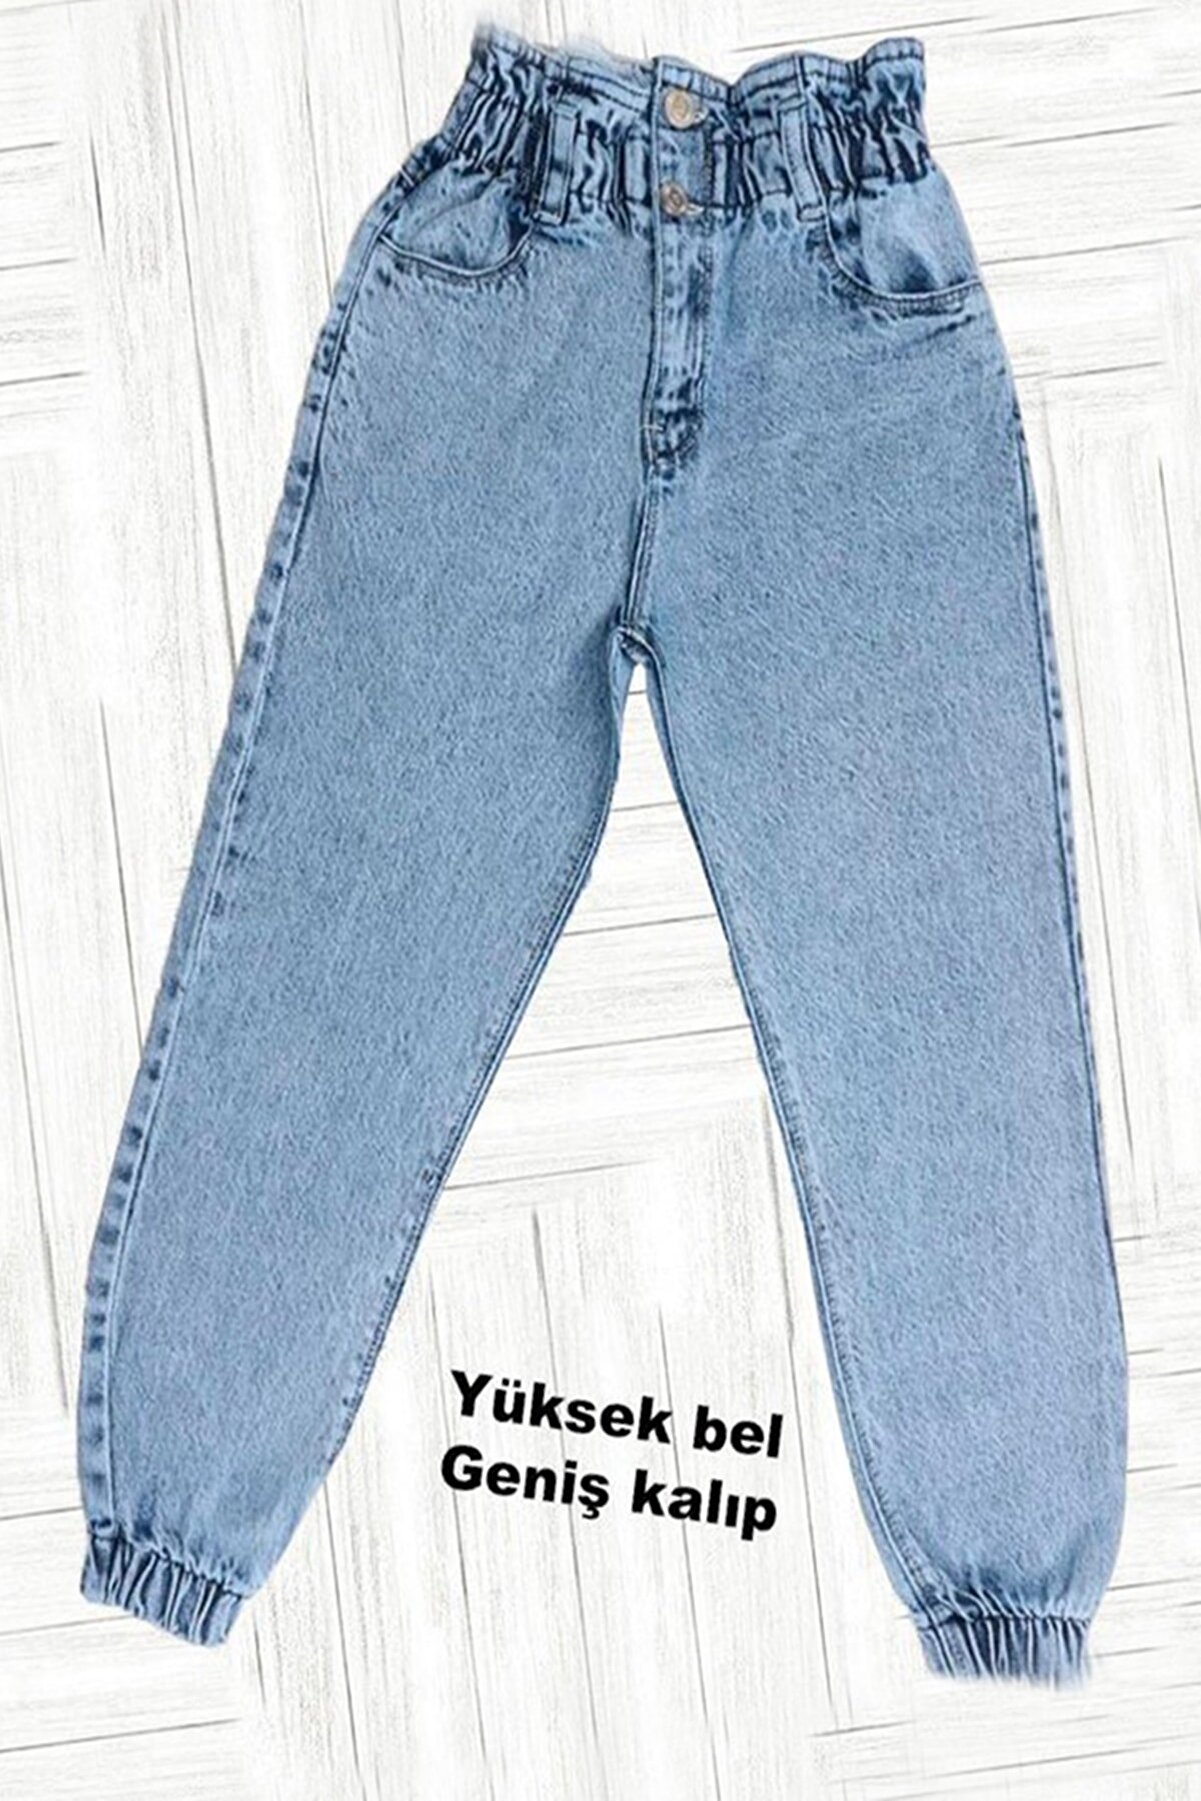 ADABEBEK Kız Çocuk Geniş Kalıp Mom Jeans Kot Pantolon